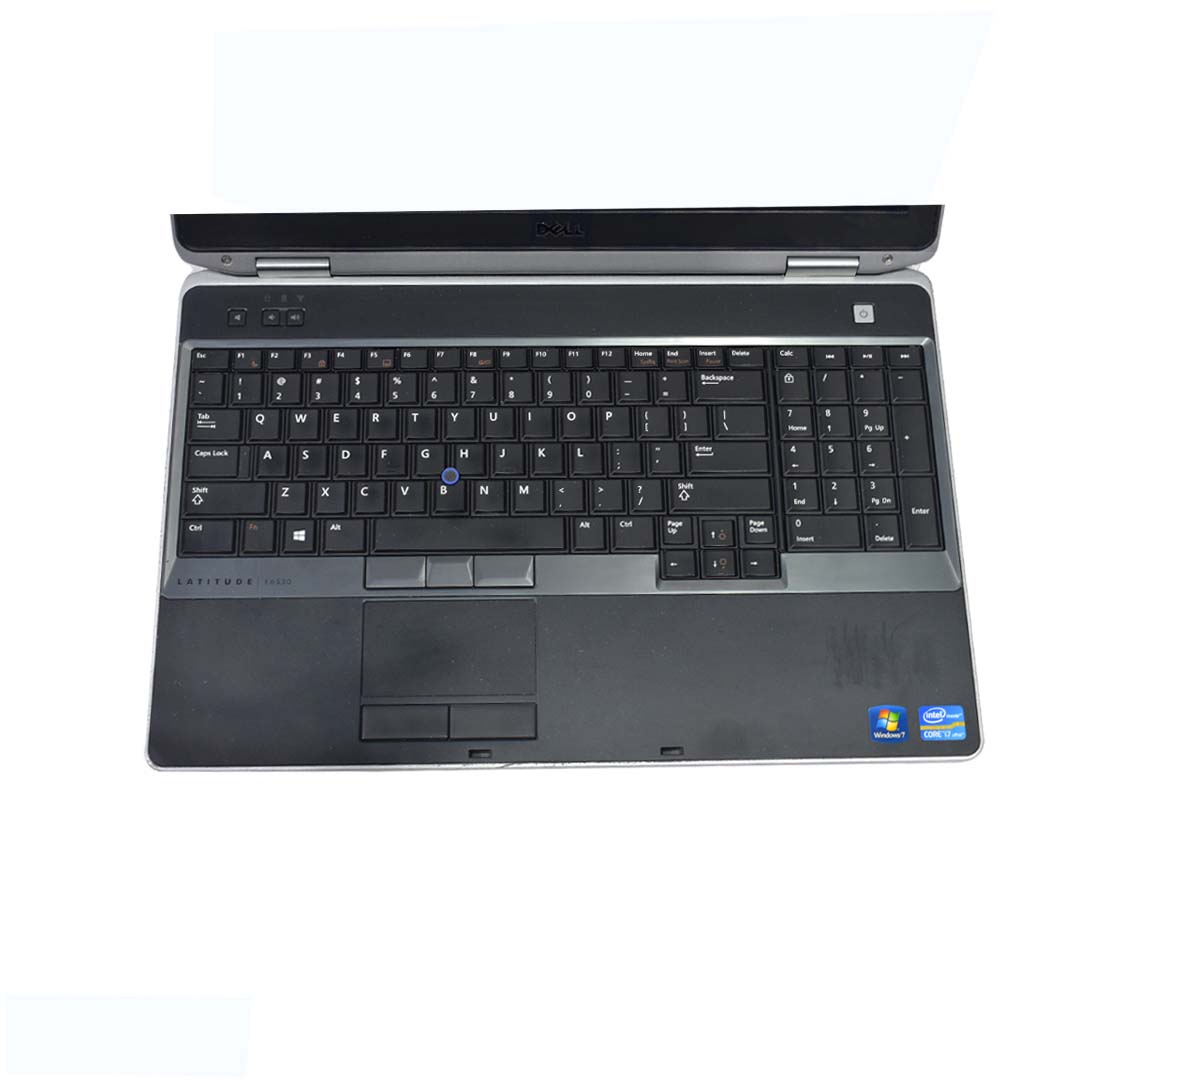 Dell Latitude E6530 Business Laptop, Intel Core i7-3rd Gen CPU, 8GB RAM, 500GB HDD, 15.6 inch Display, Windows 10 Pro, Refurbished Laptop